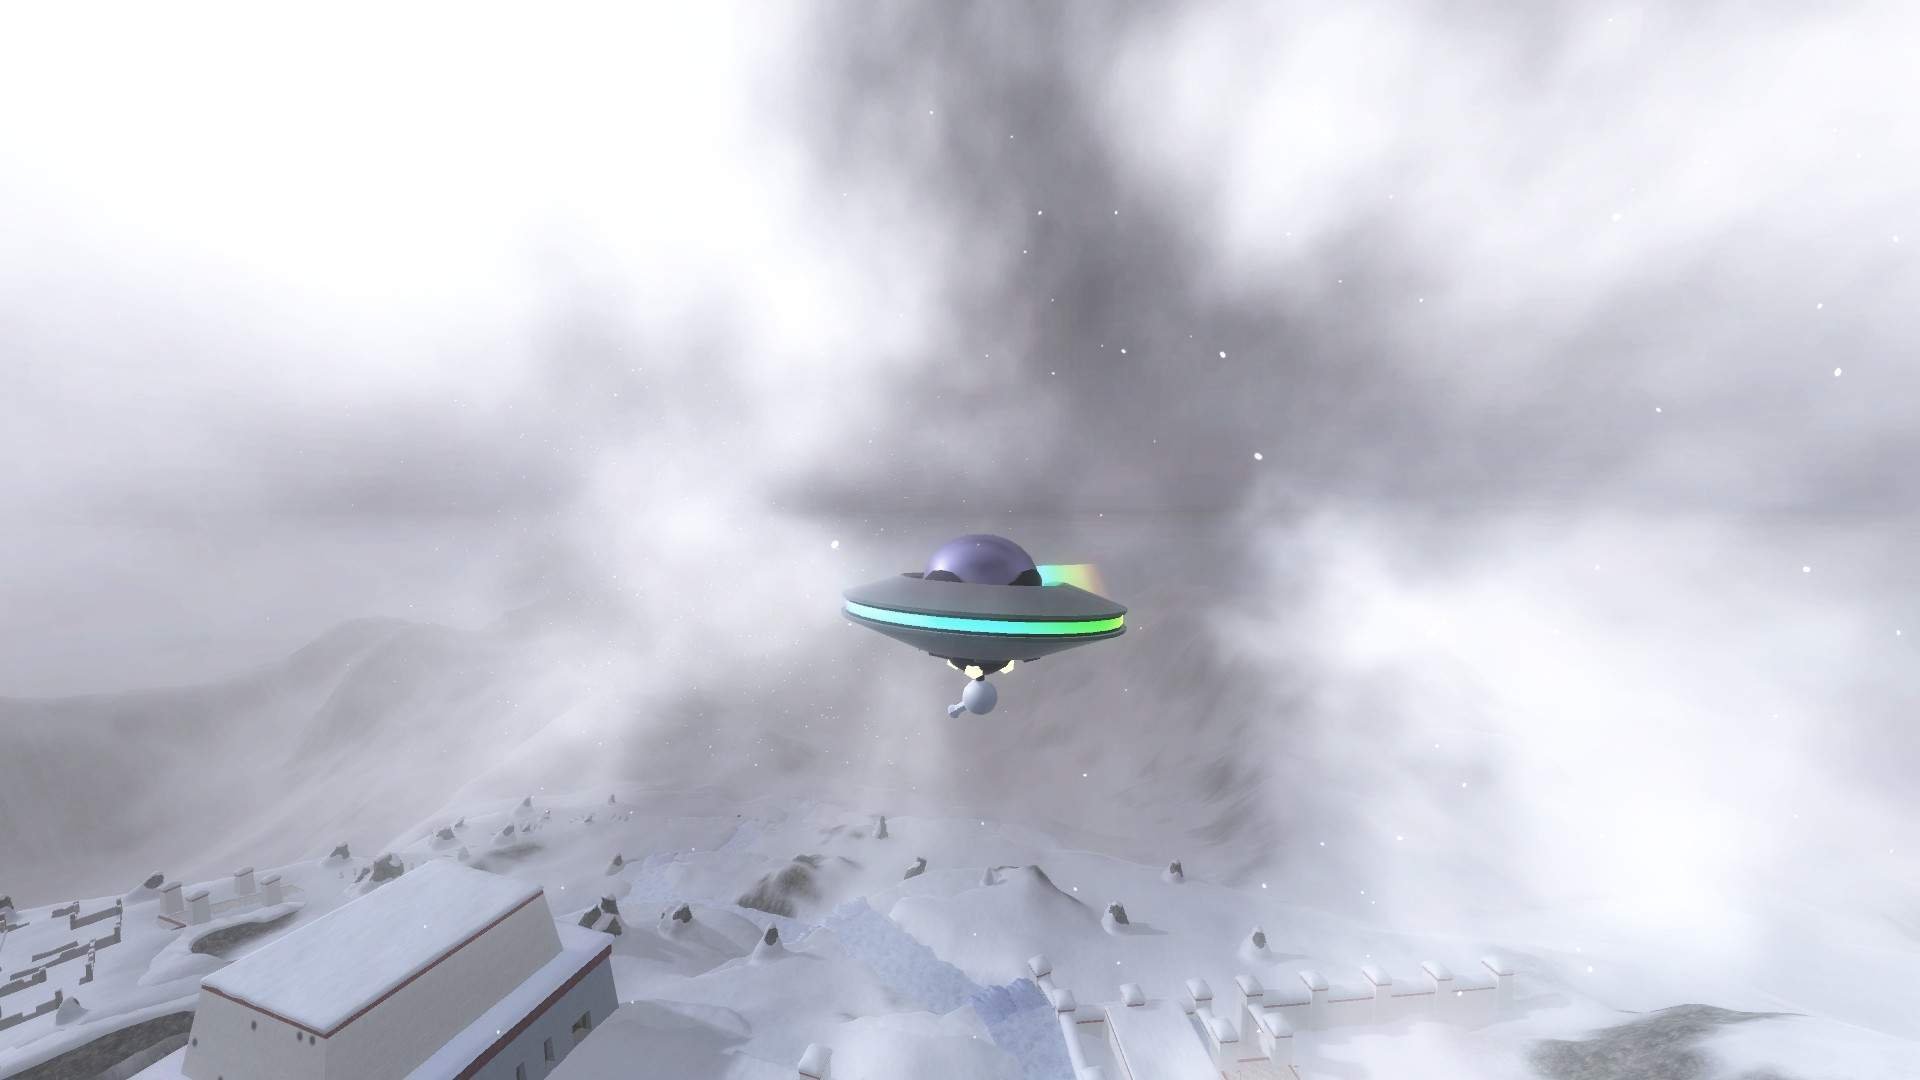 ravenfield ufo